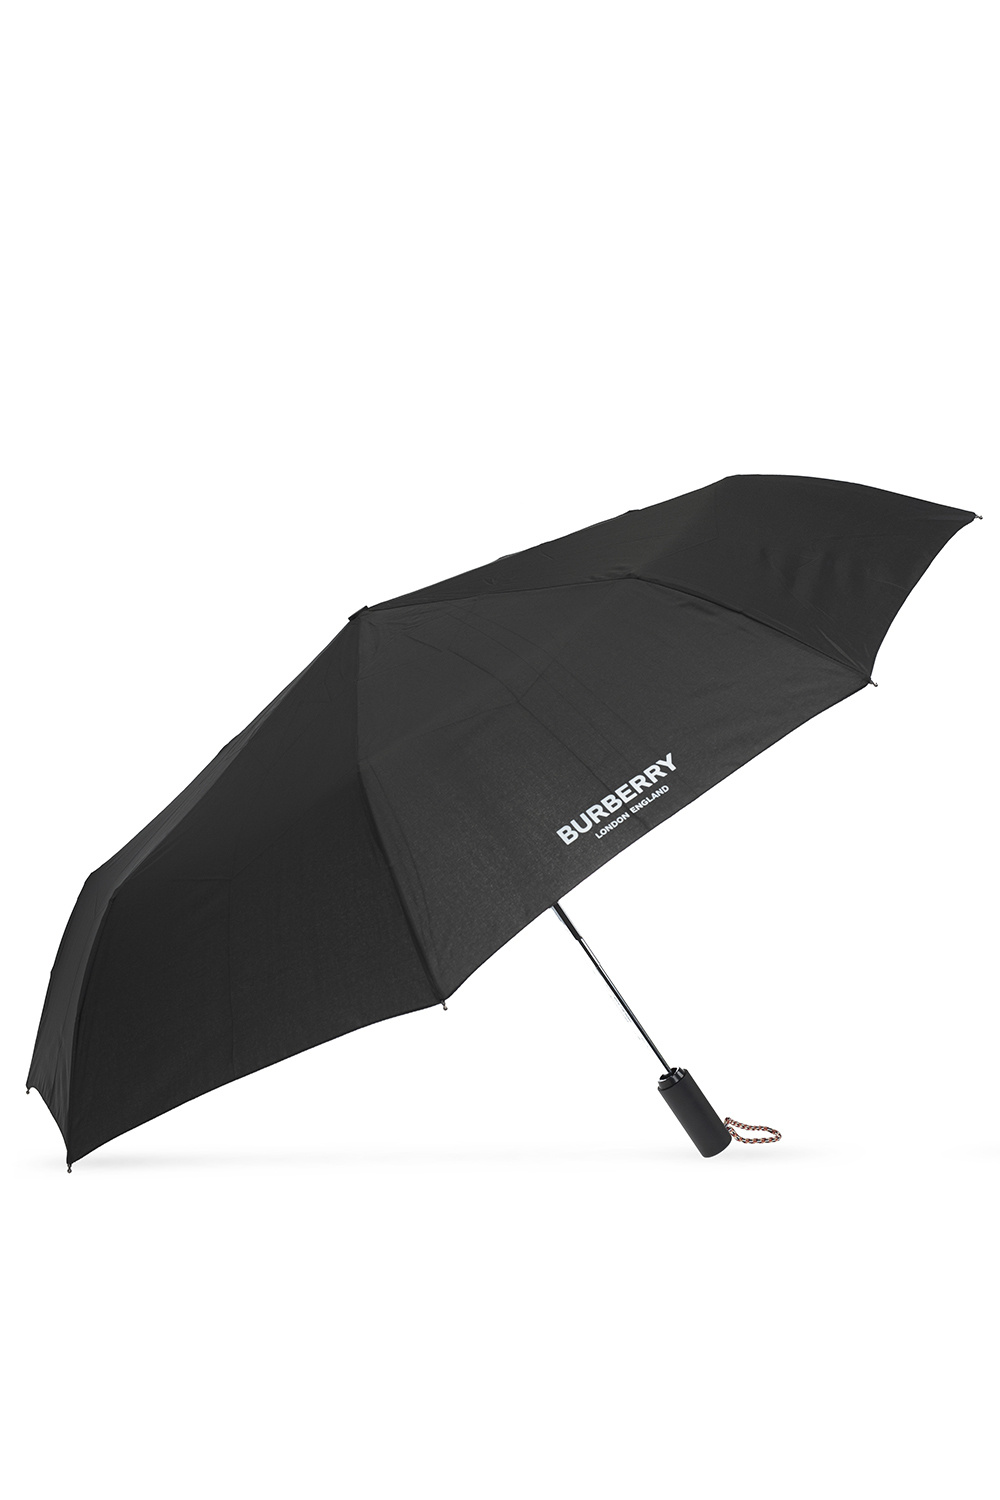 burberry fastening Folding umbrella with logo